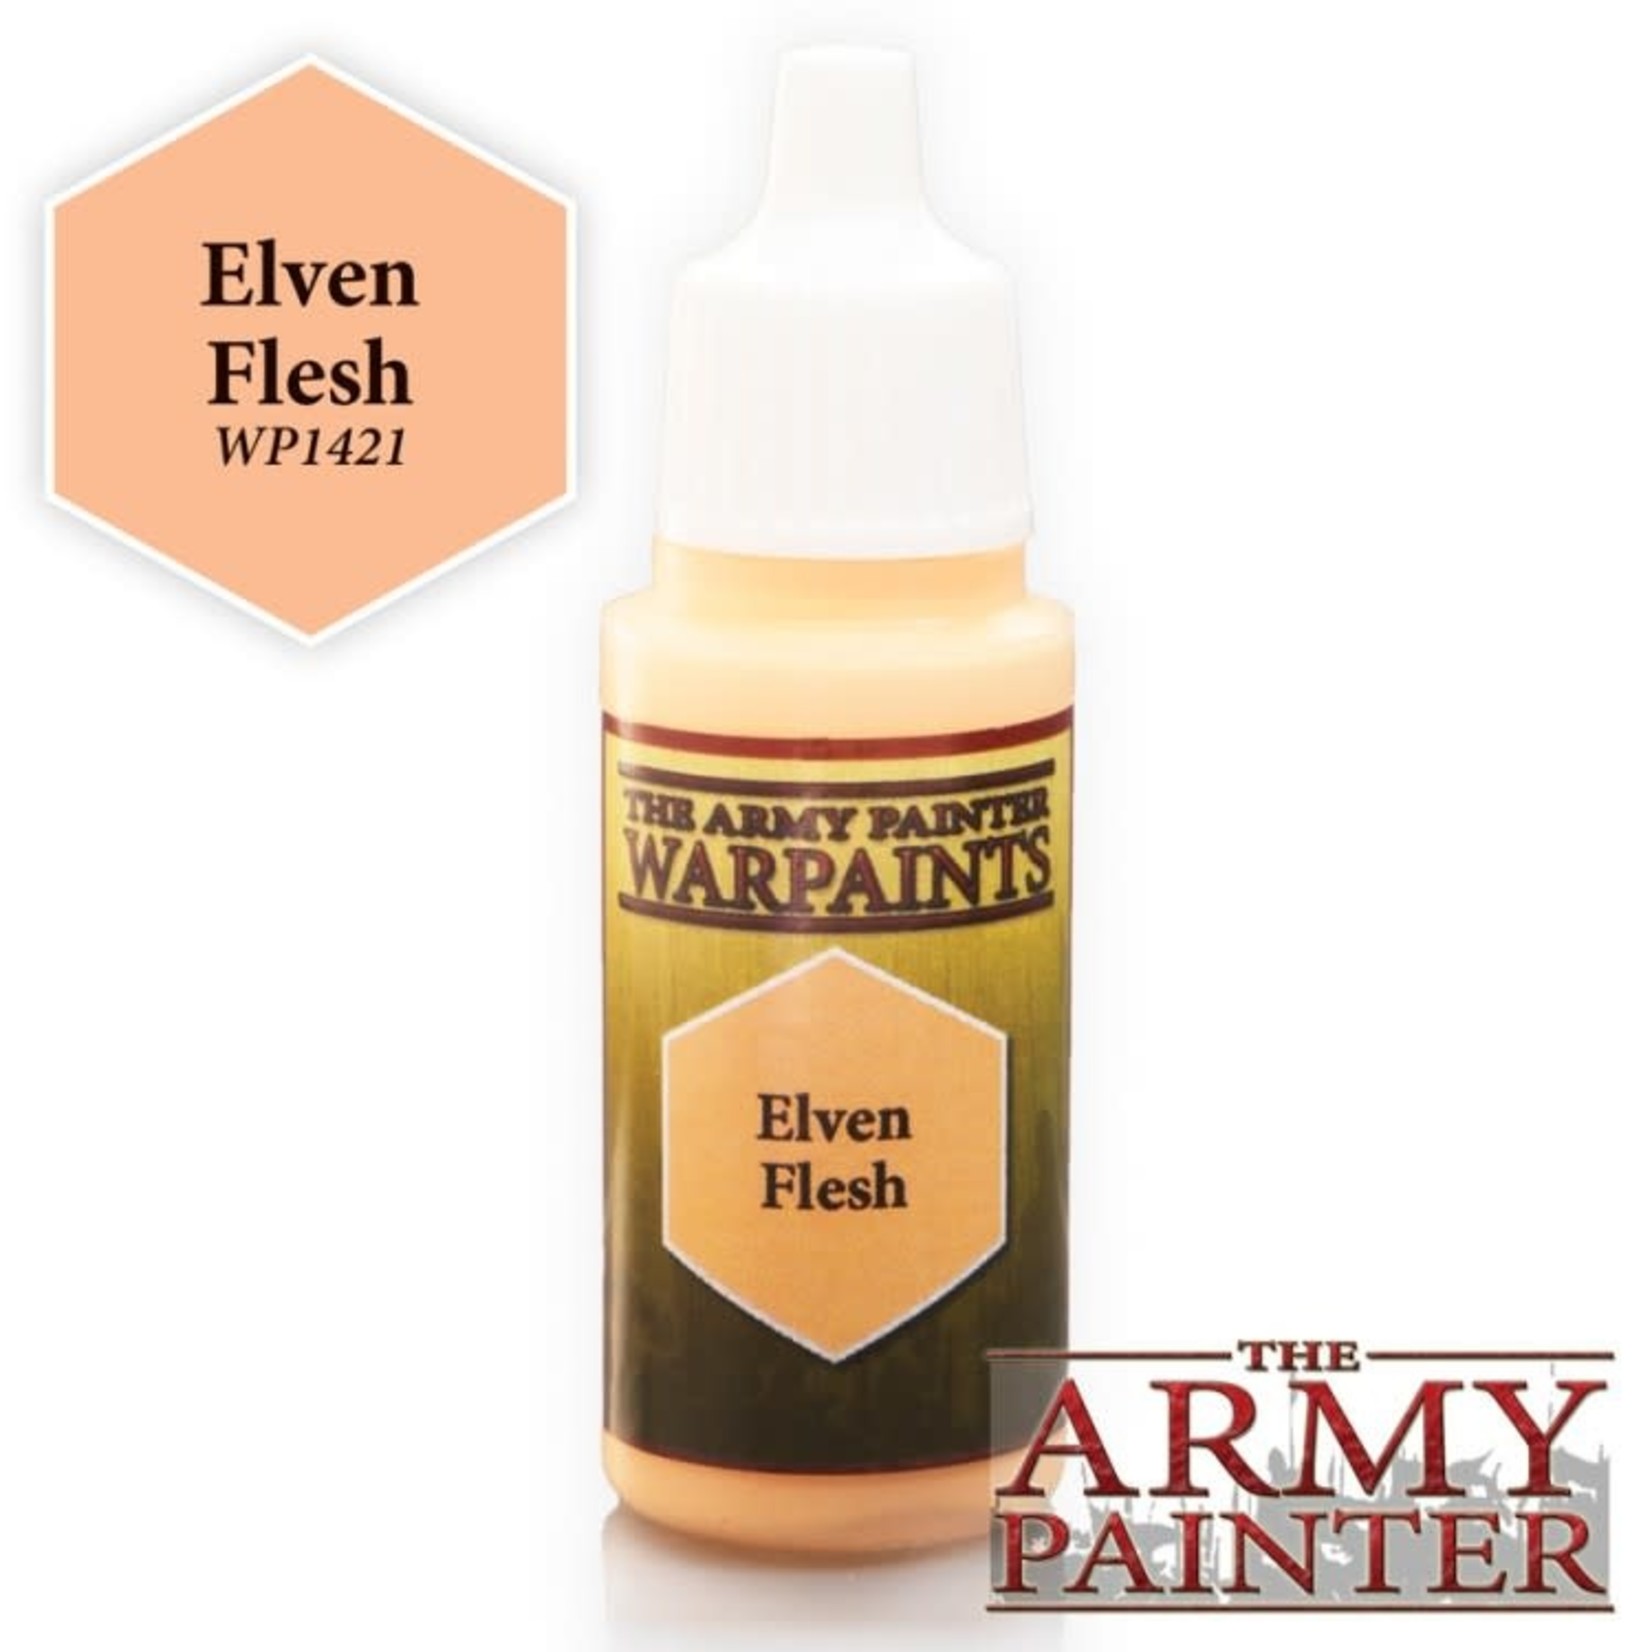 Army Painter Army Painter Warpaints Elven Flesh